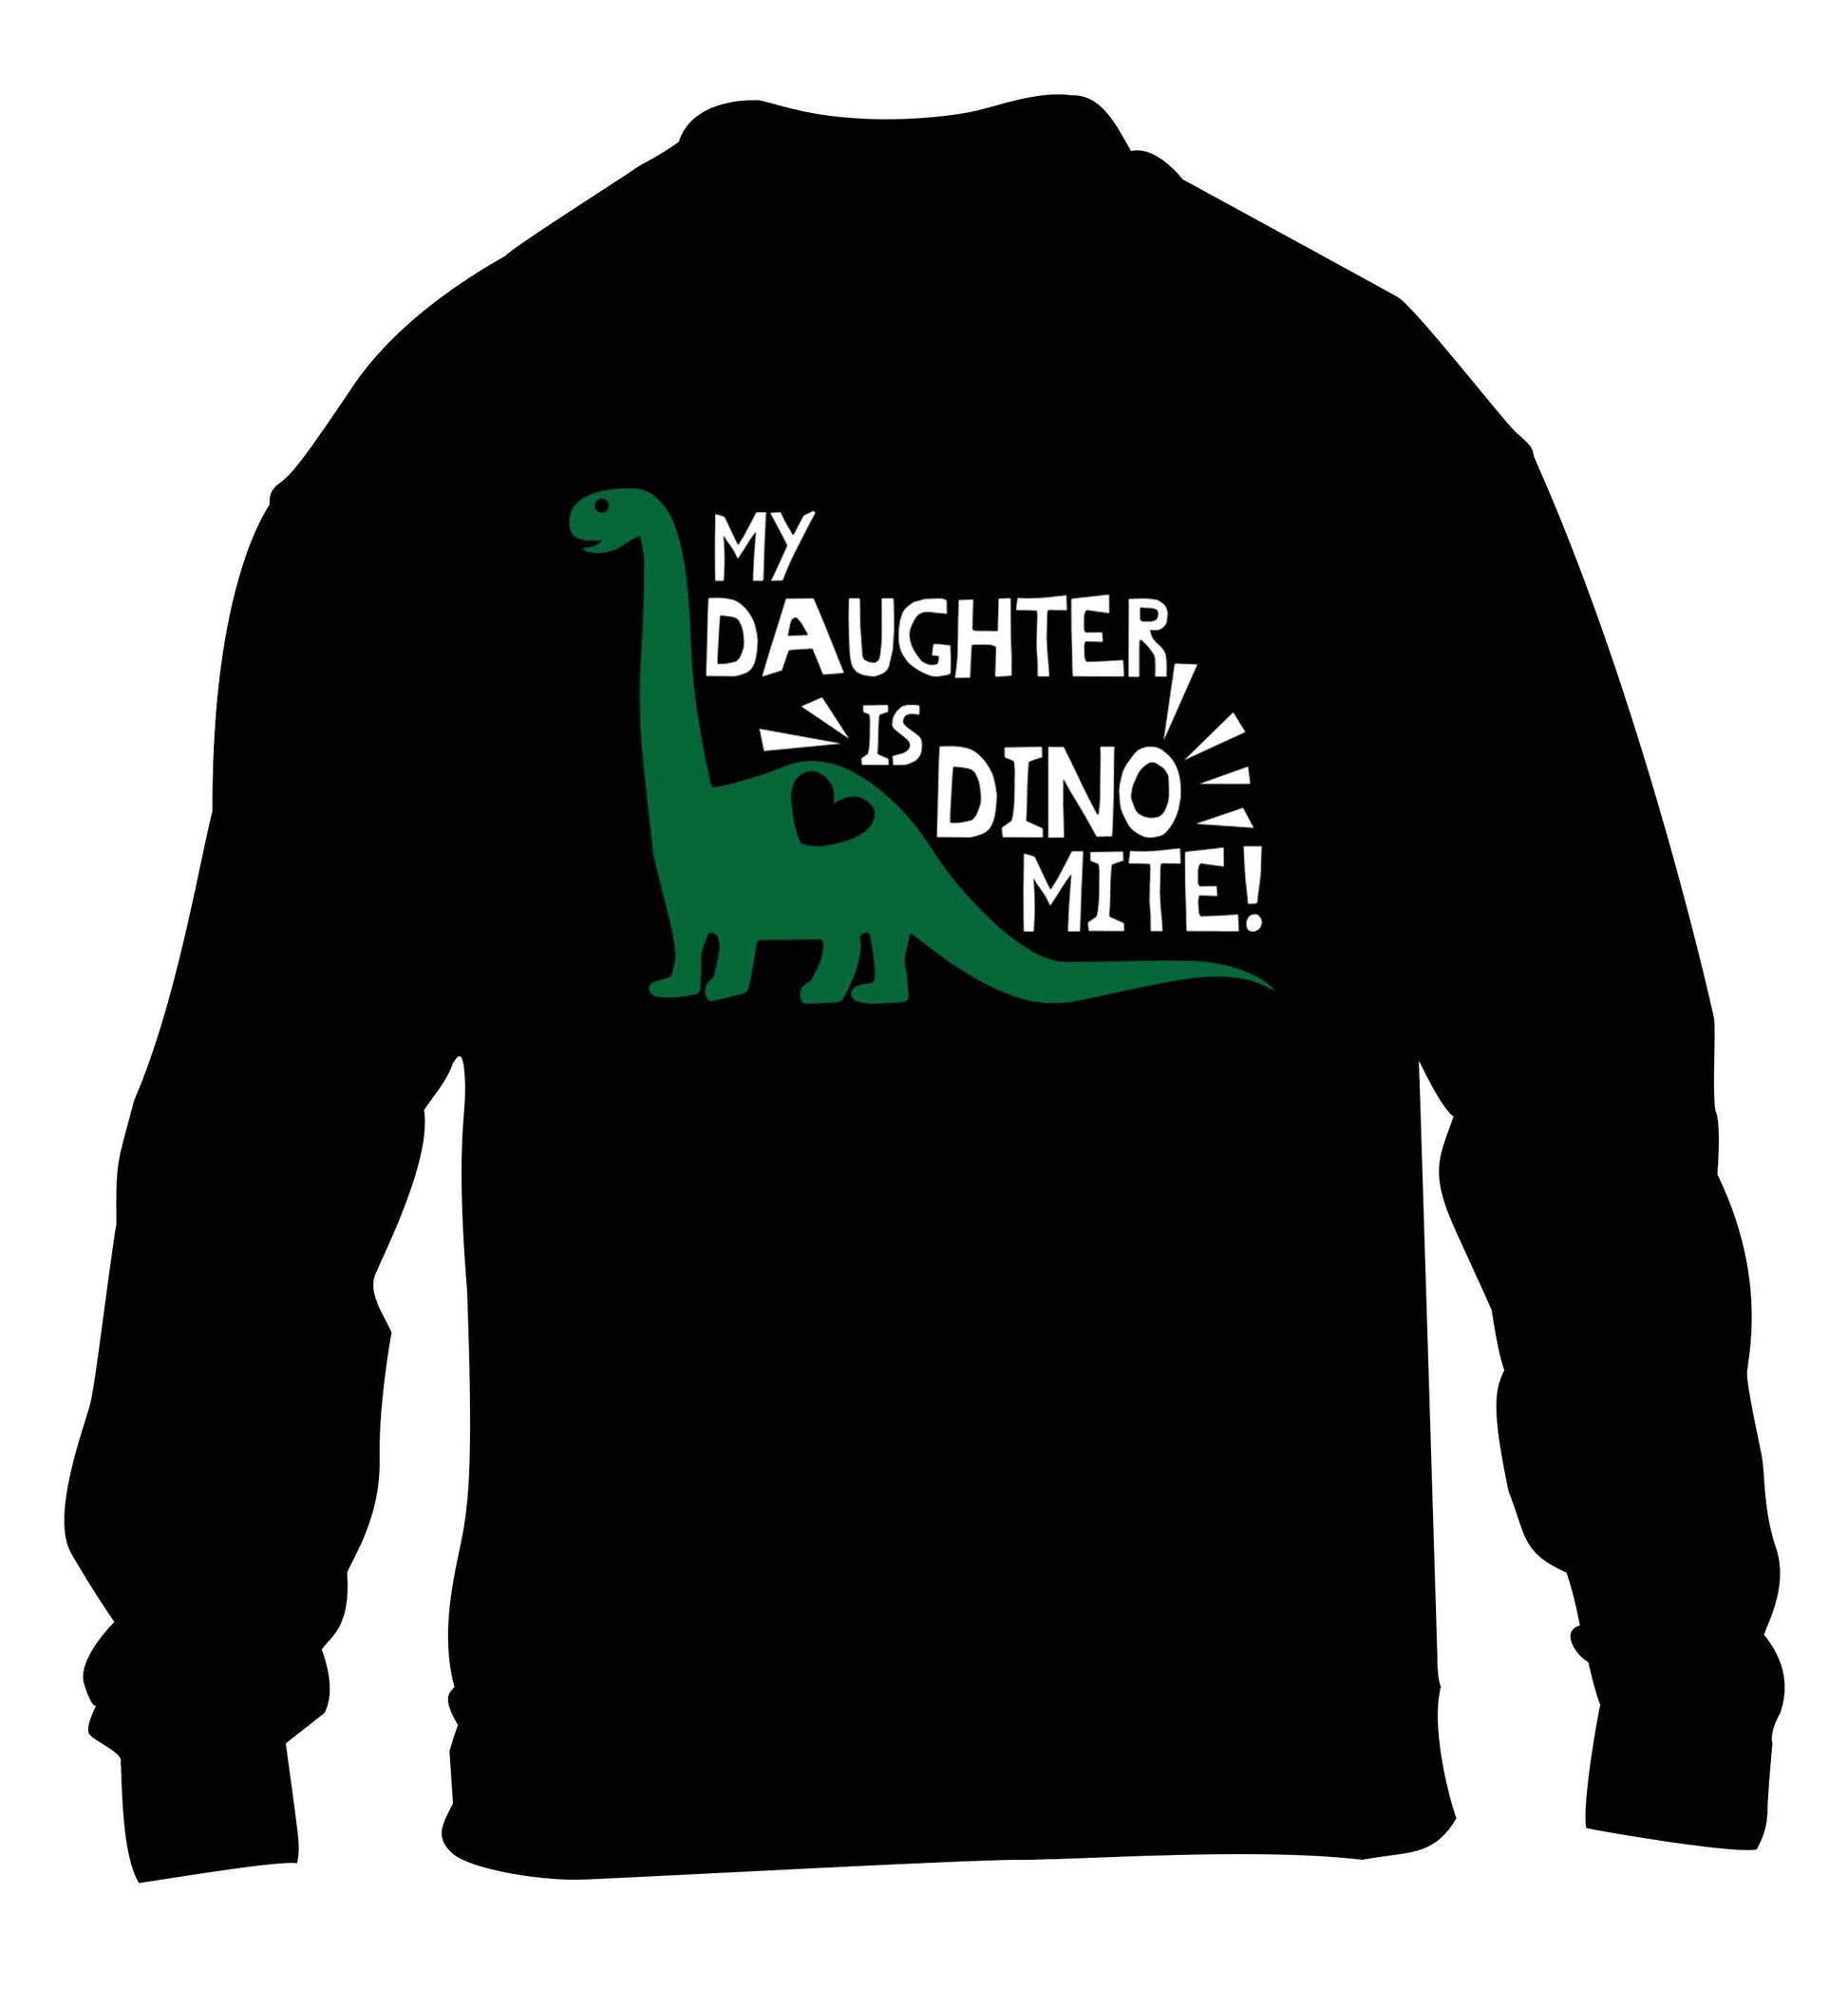 My daughter is dinomite! children's black sweater 12-13 Years